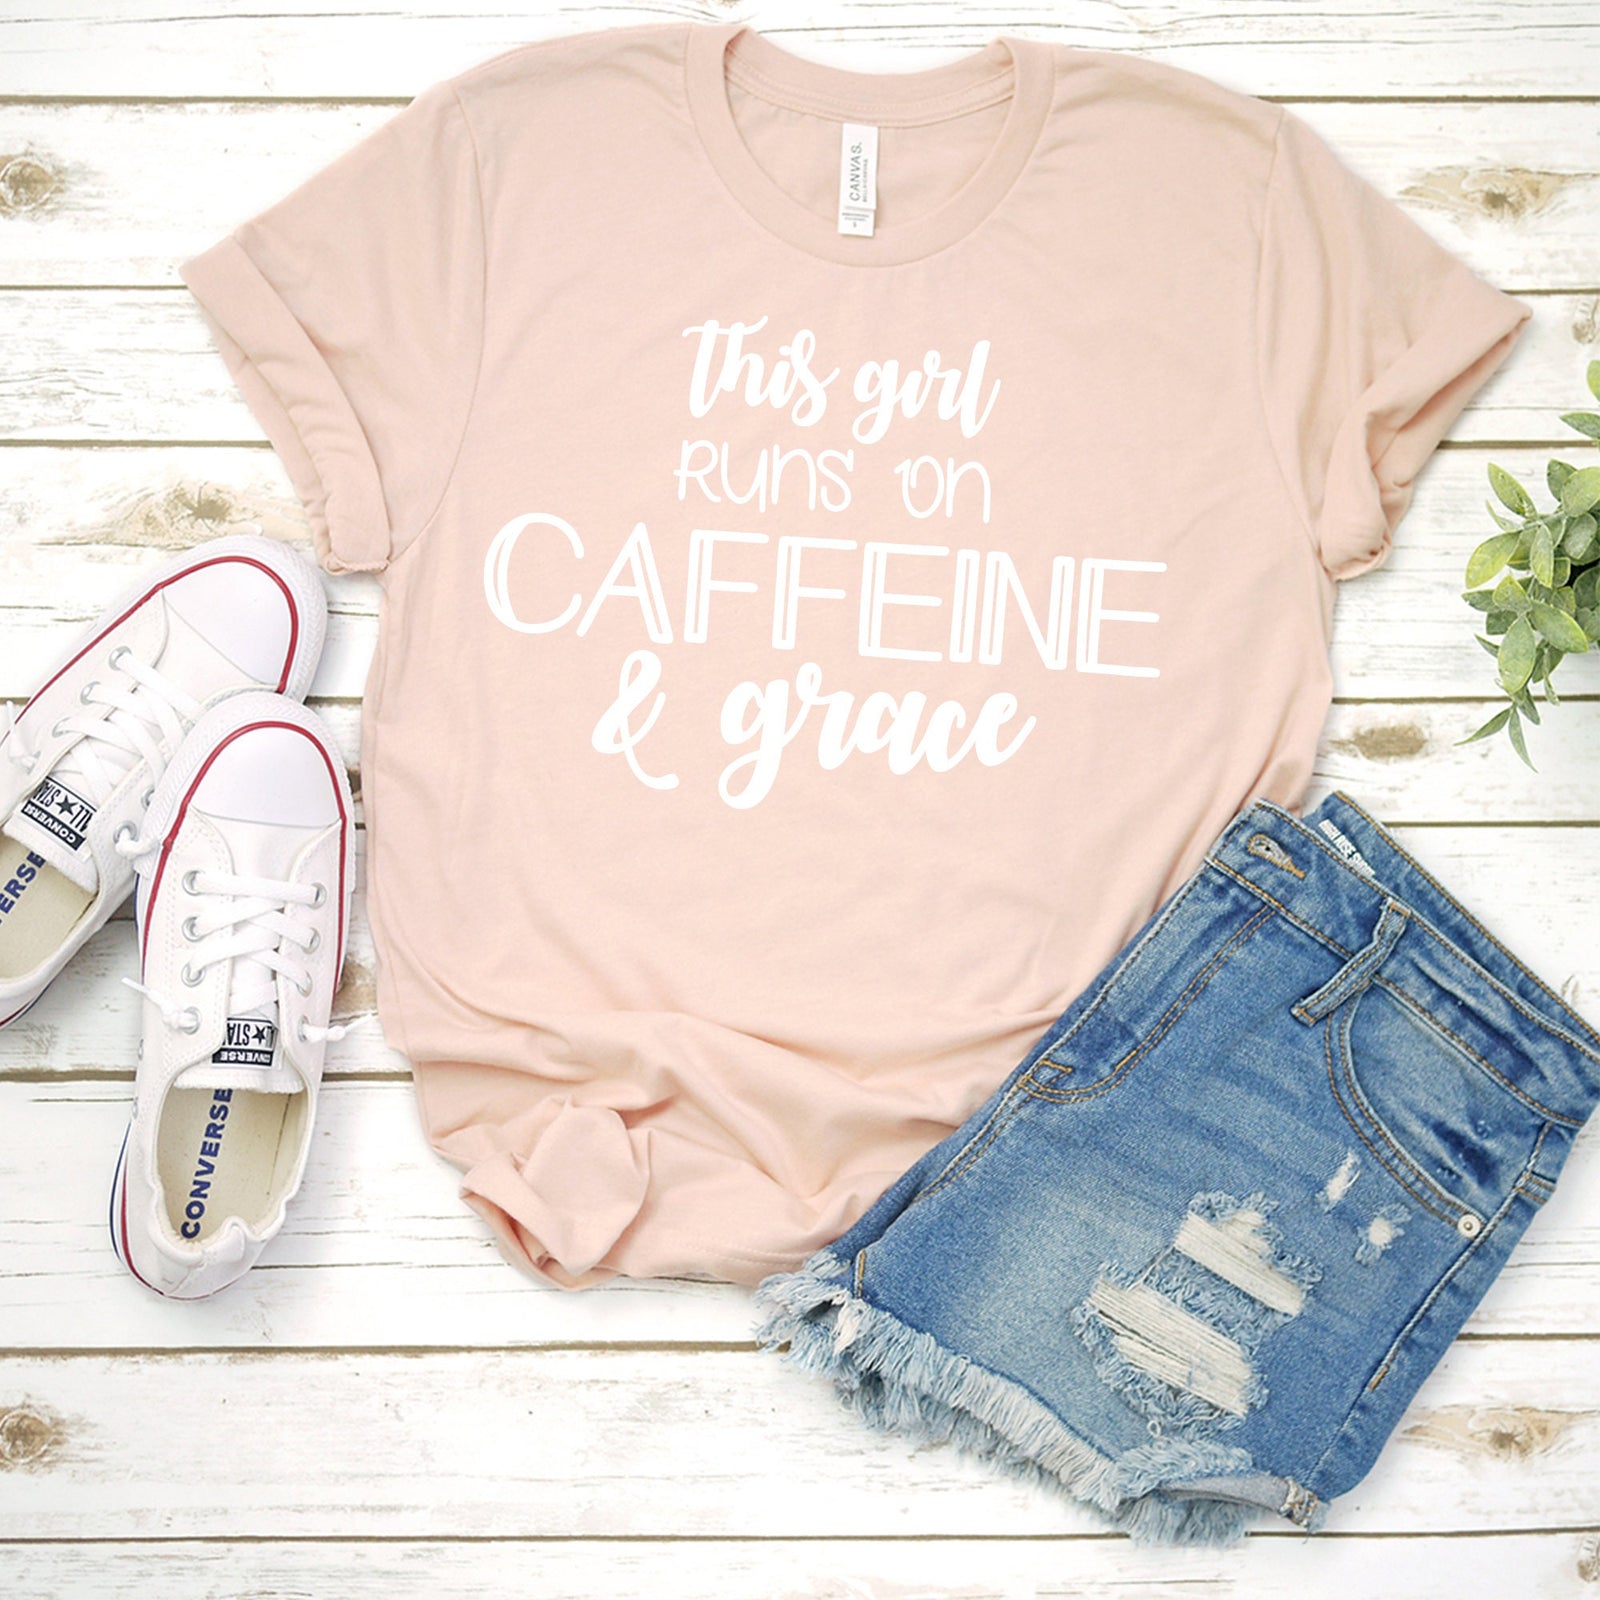 This Girl Runs on Caffeine and Grace T Shirt - Christian Shirt- Jesus T Shirt - Bible Verse